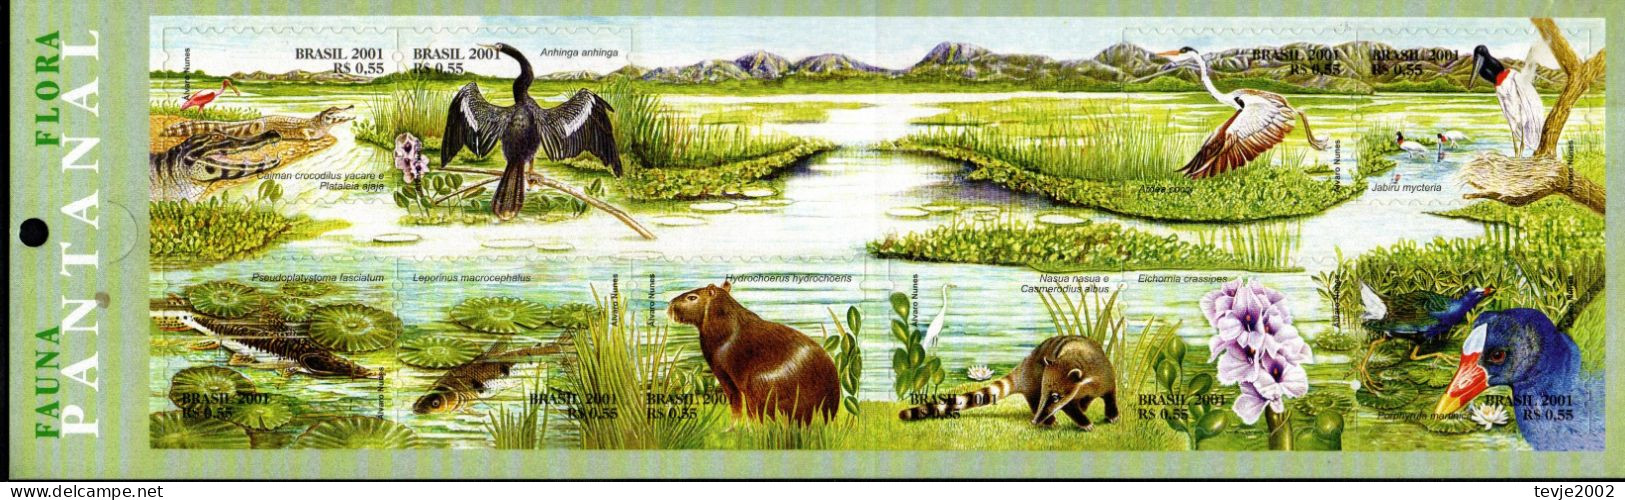 Brasilien 2001 - Markenheftchen Booklet Mi.Nr. 3197 - 3206 - Postfrisch MNH - Flora Fauna - Carnets